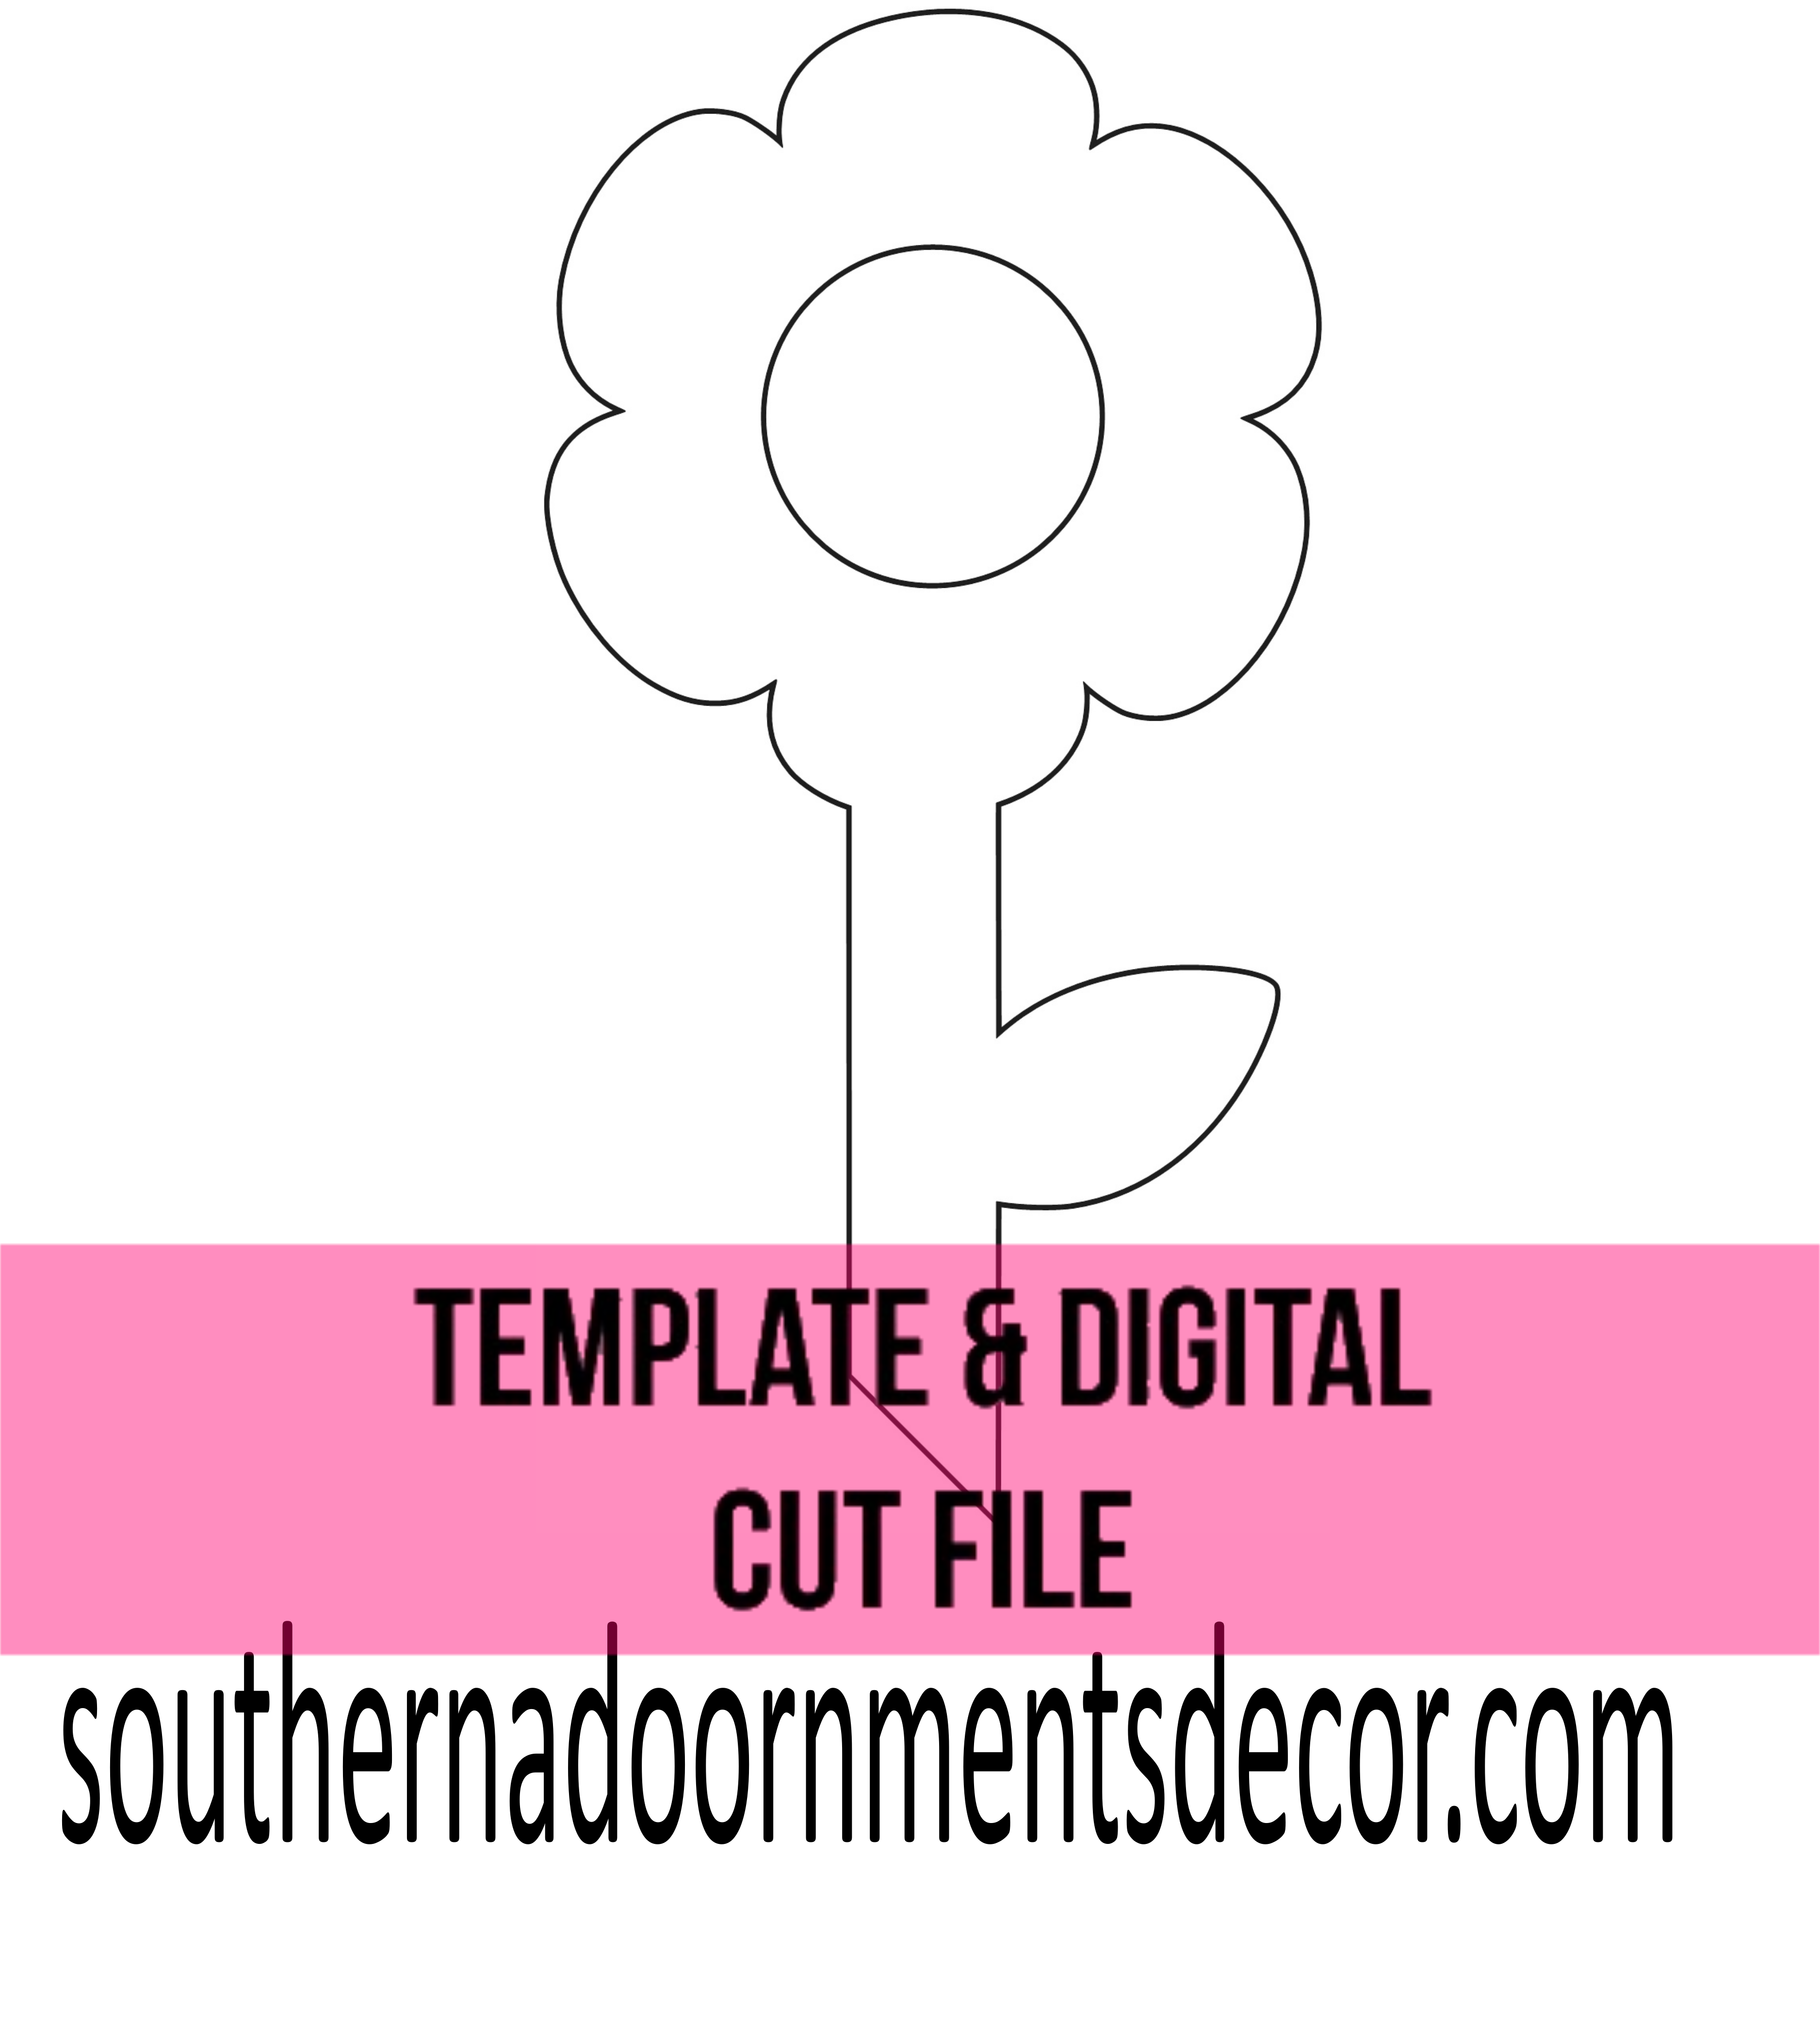 Flower with Stem Template & Digital Cut File